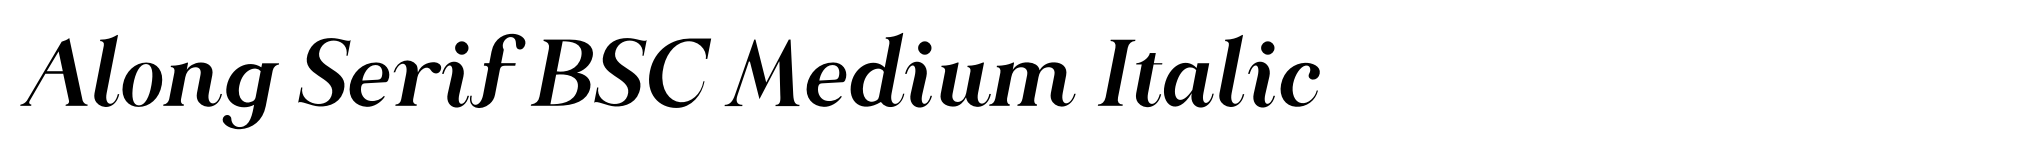 Along Serif BSC Medium Italic image